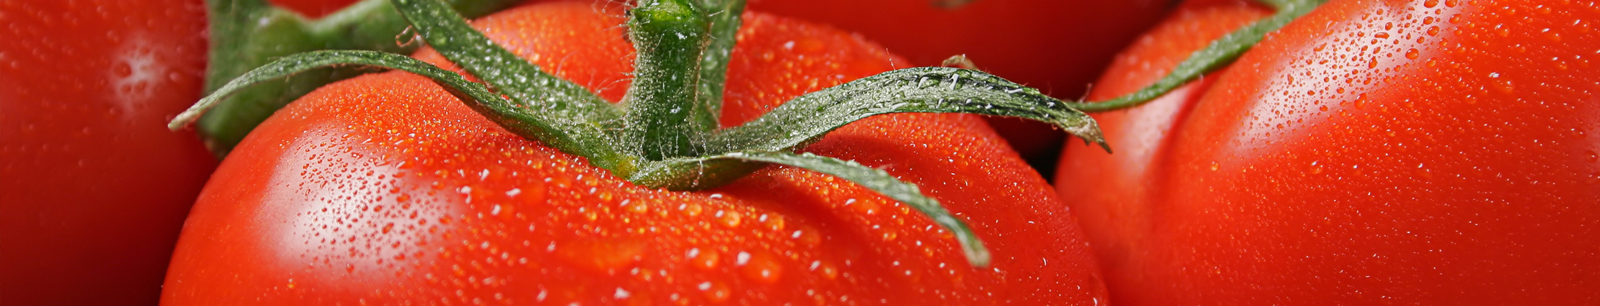 Tomato banner